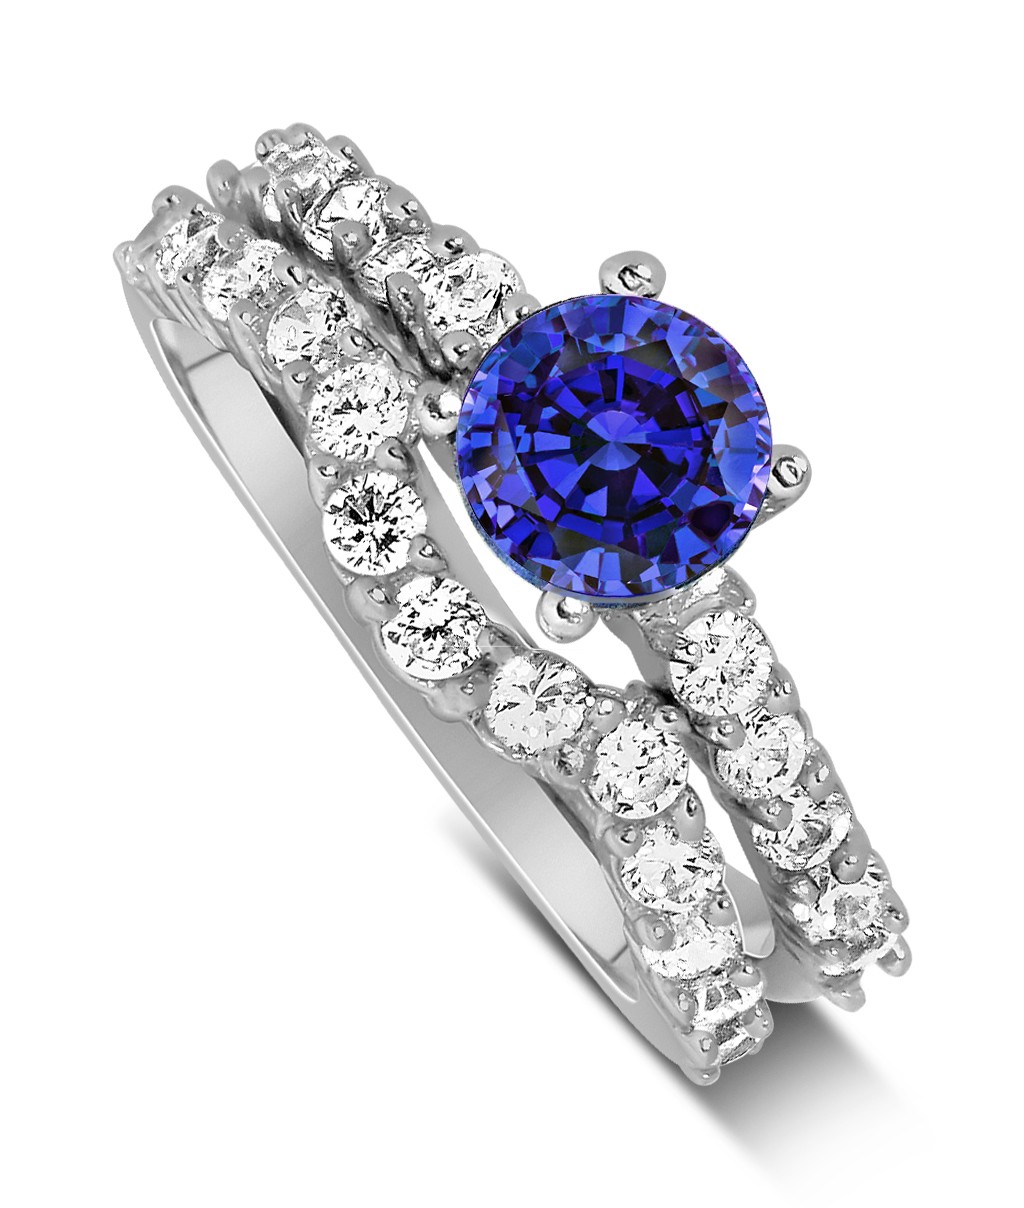 2 Carat Vintage Round cut Blue Sapphire and Diamond Wedding Ring Set in